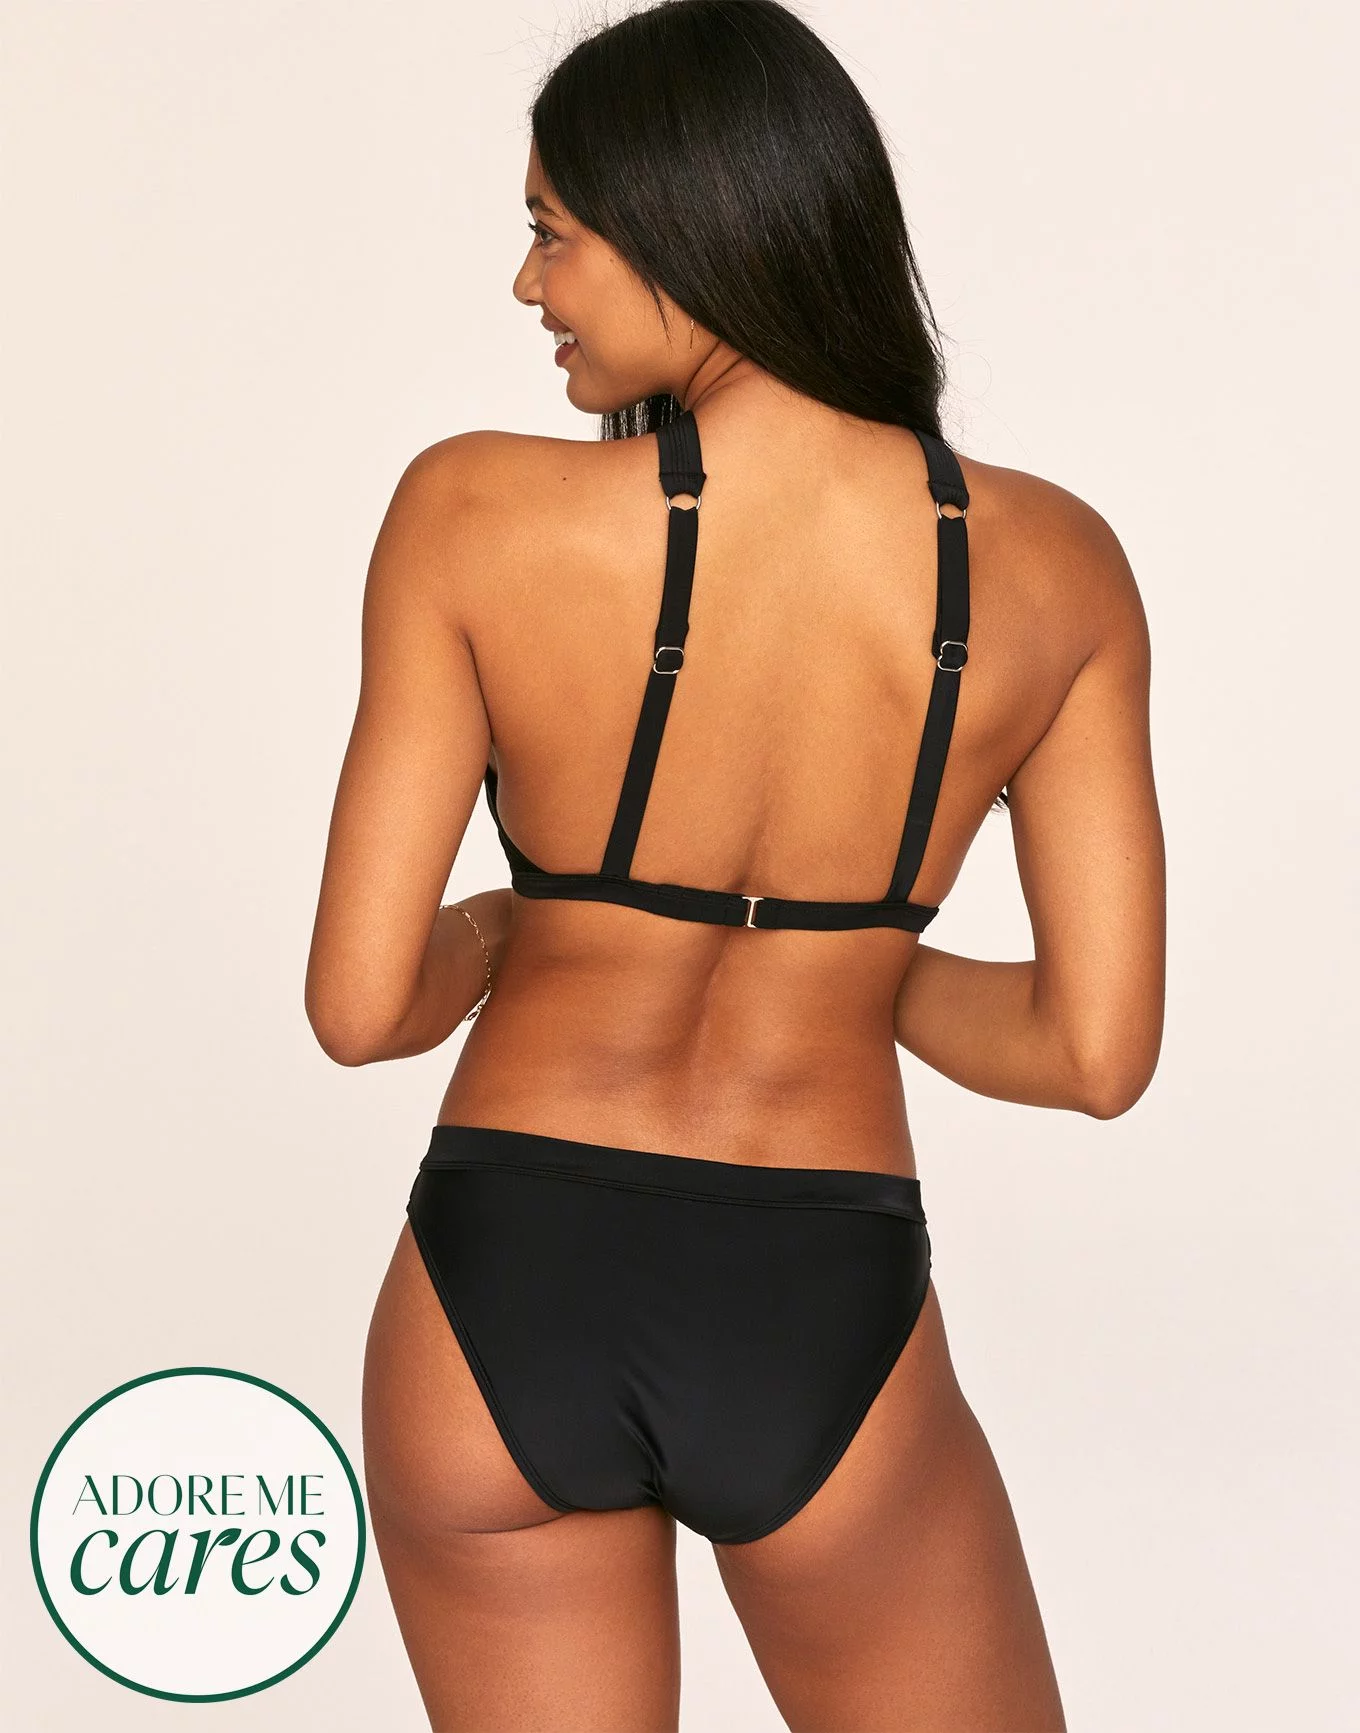  Adore Me, Sexy Swimwear for Women, Tatiana Contour, Classic  Black Bikini Top with Cross-Loop Details